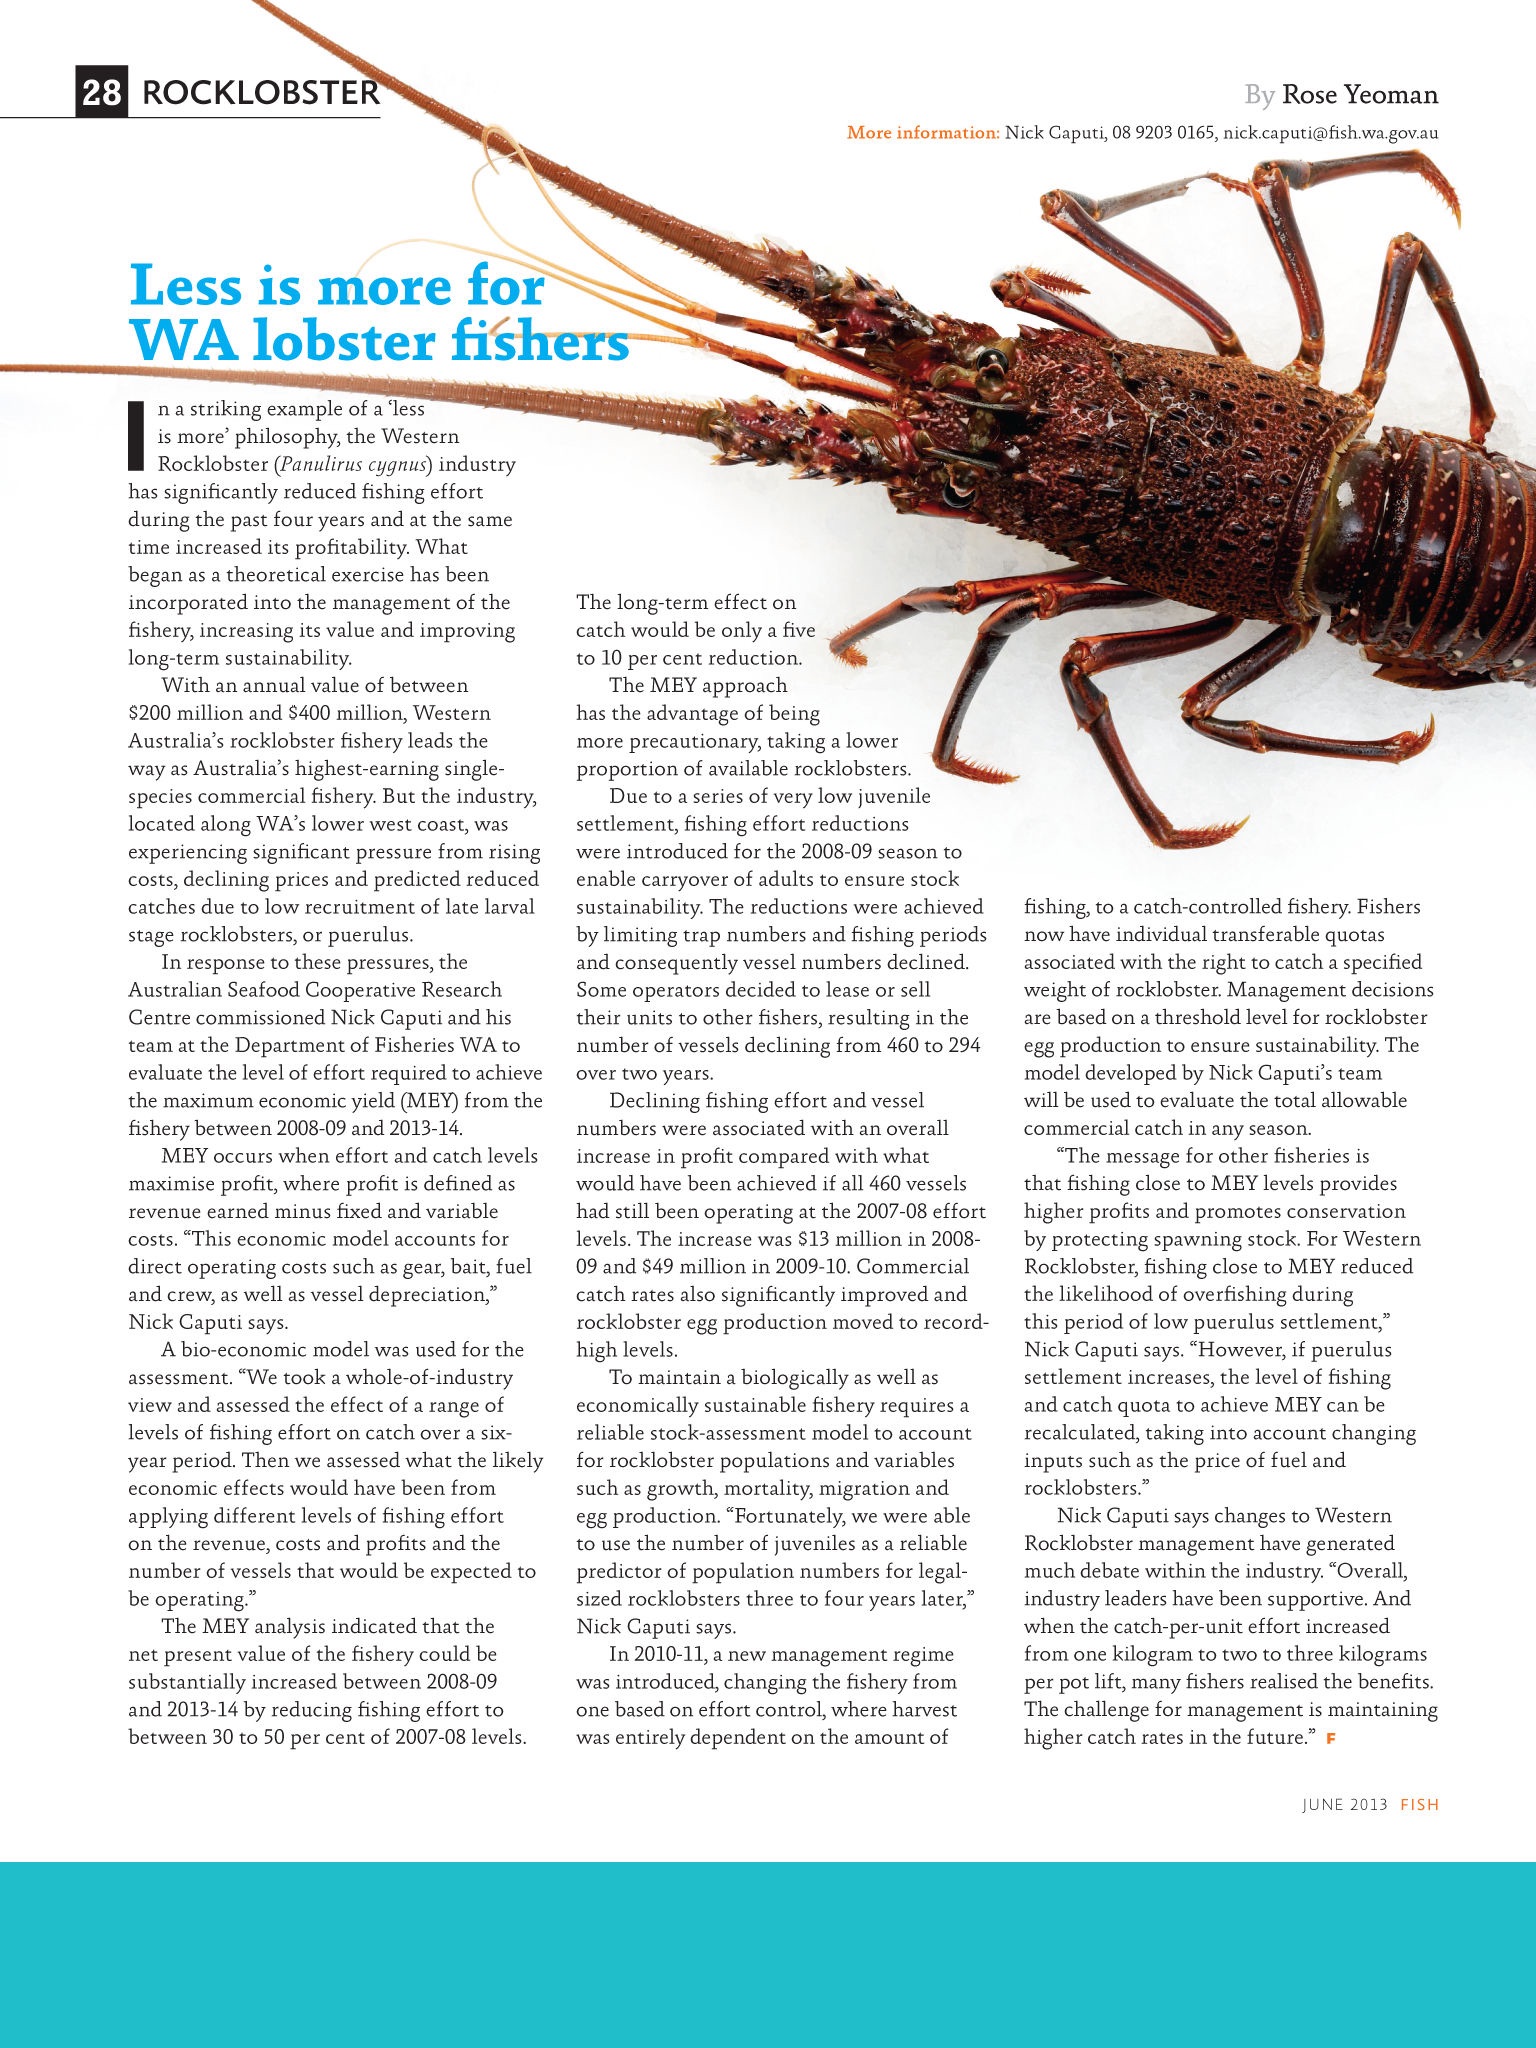 FRDC FISH Magazine screenshot 2